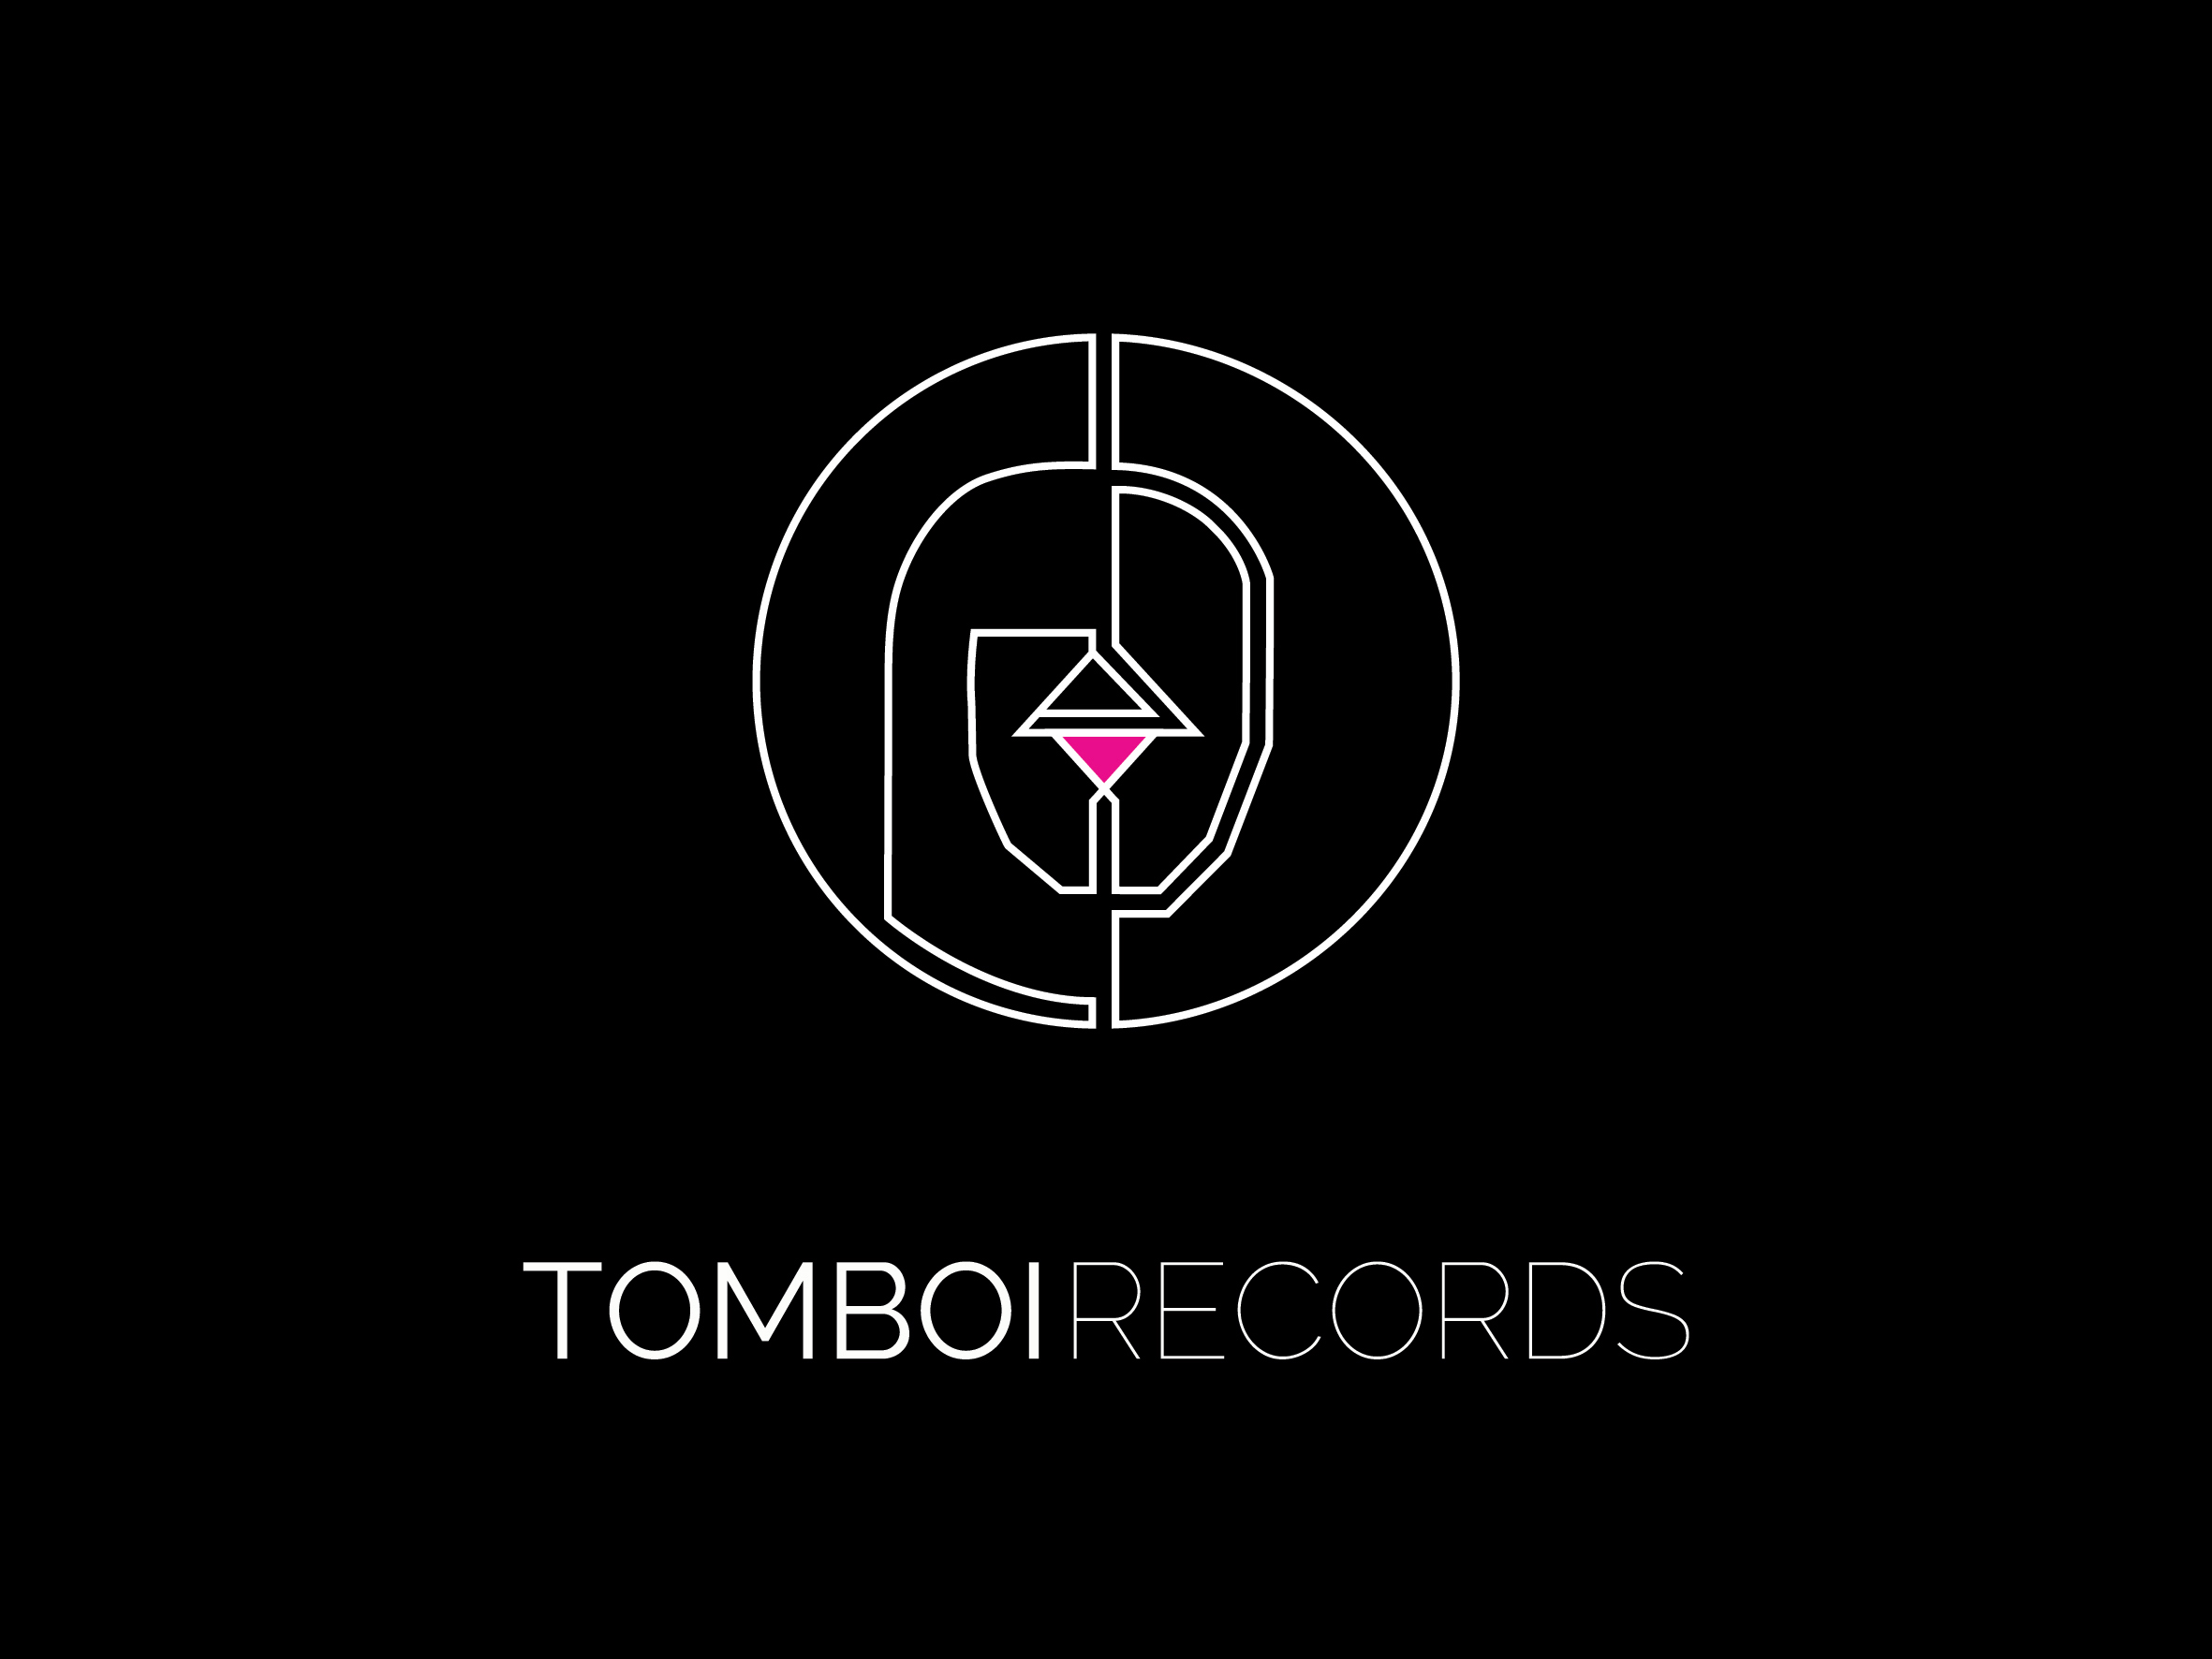 Tomboi Records label logo